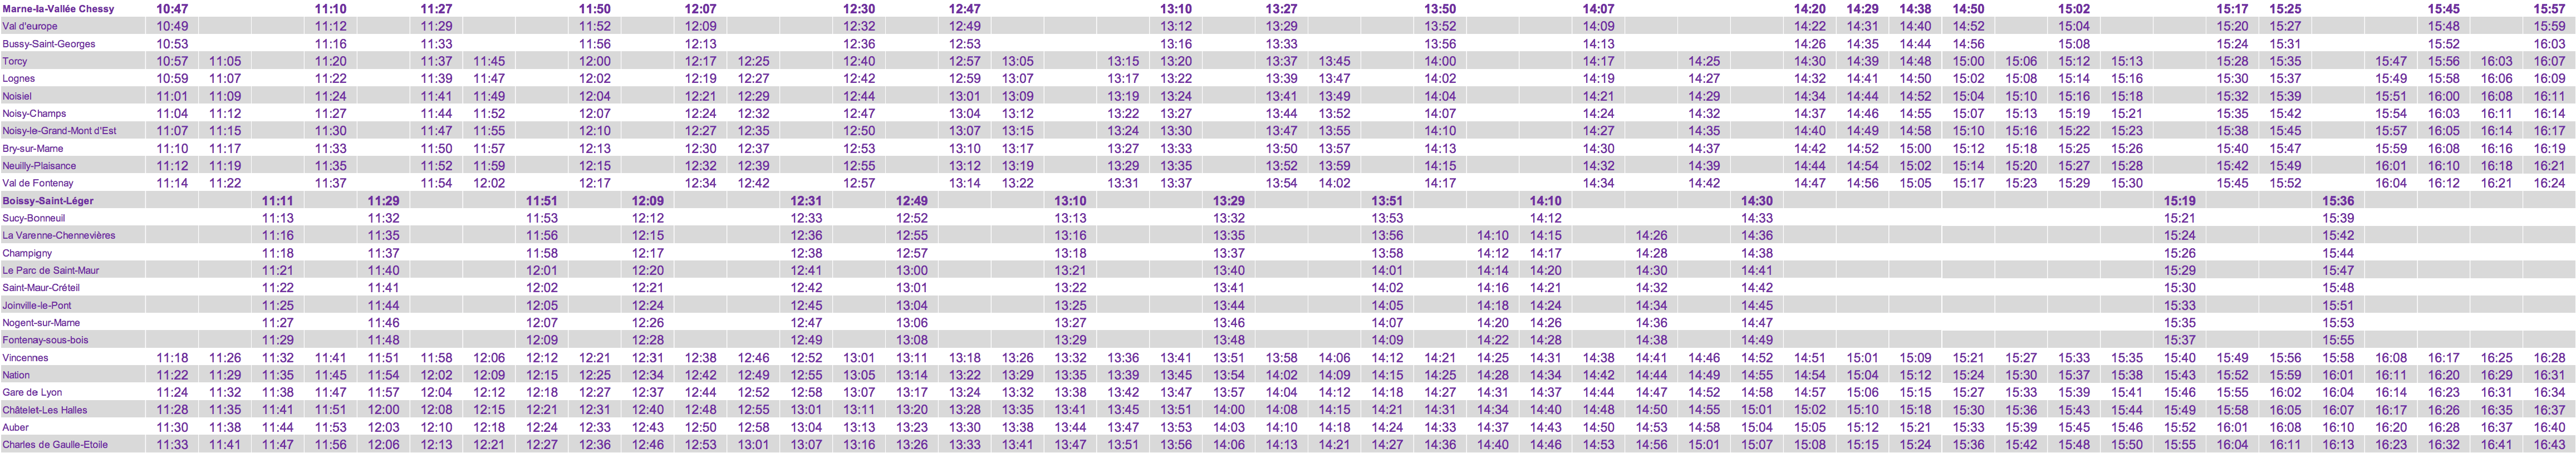 RER A Train Timetable Disneyland to Paris Midday Weekday 2020 strike